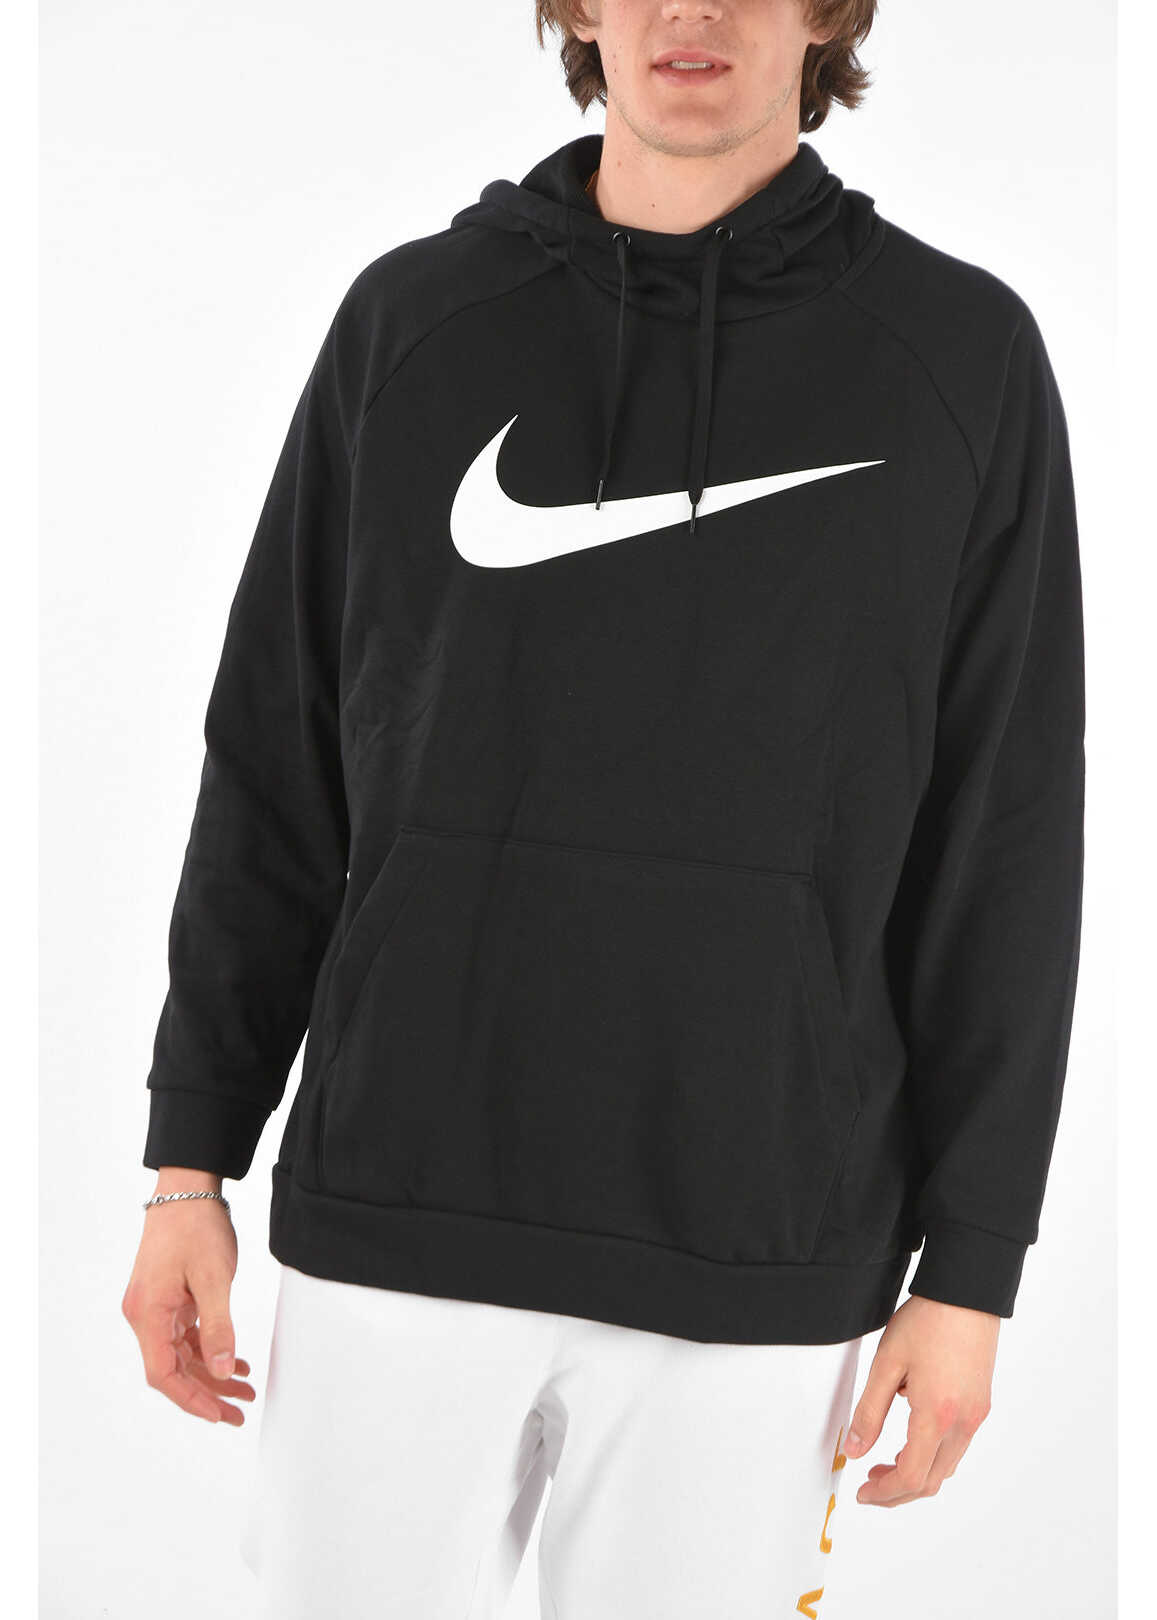 Nike Hoodie With Front Pocket Black